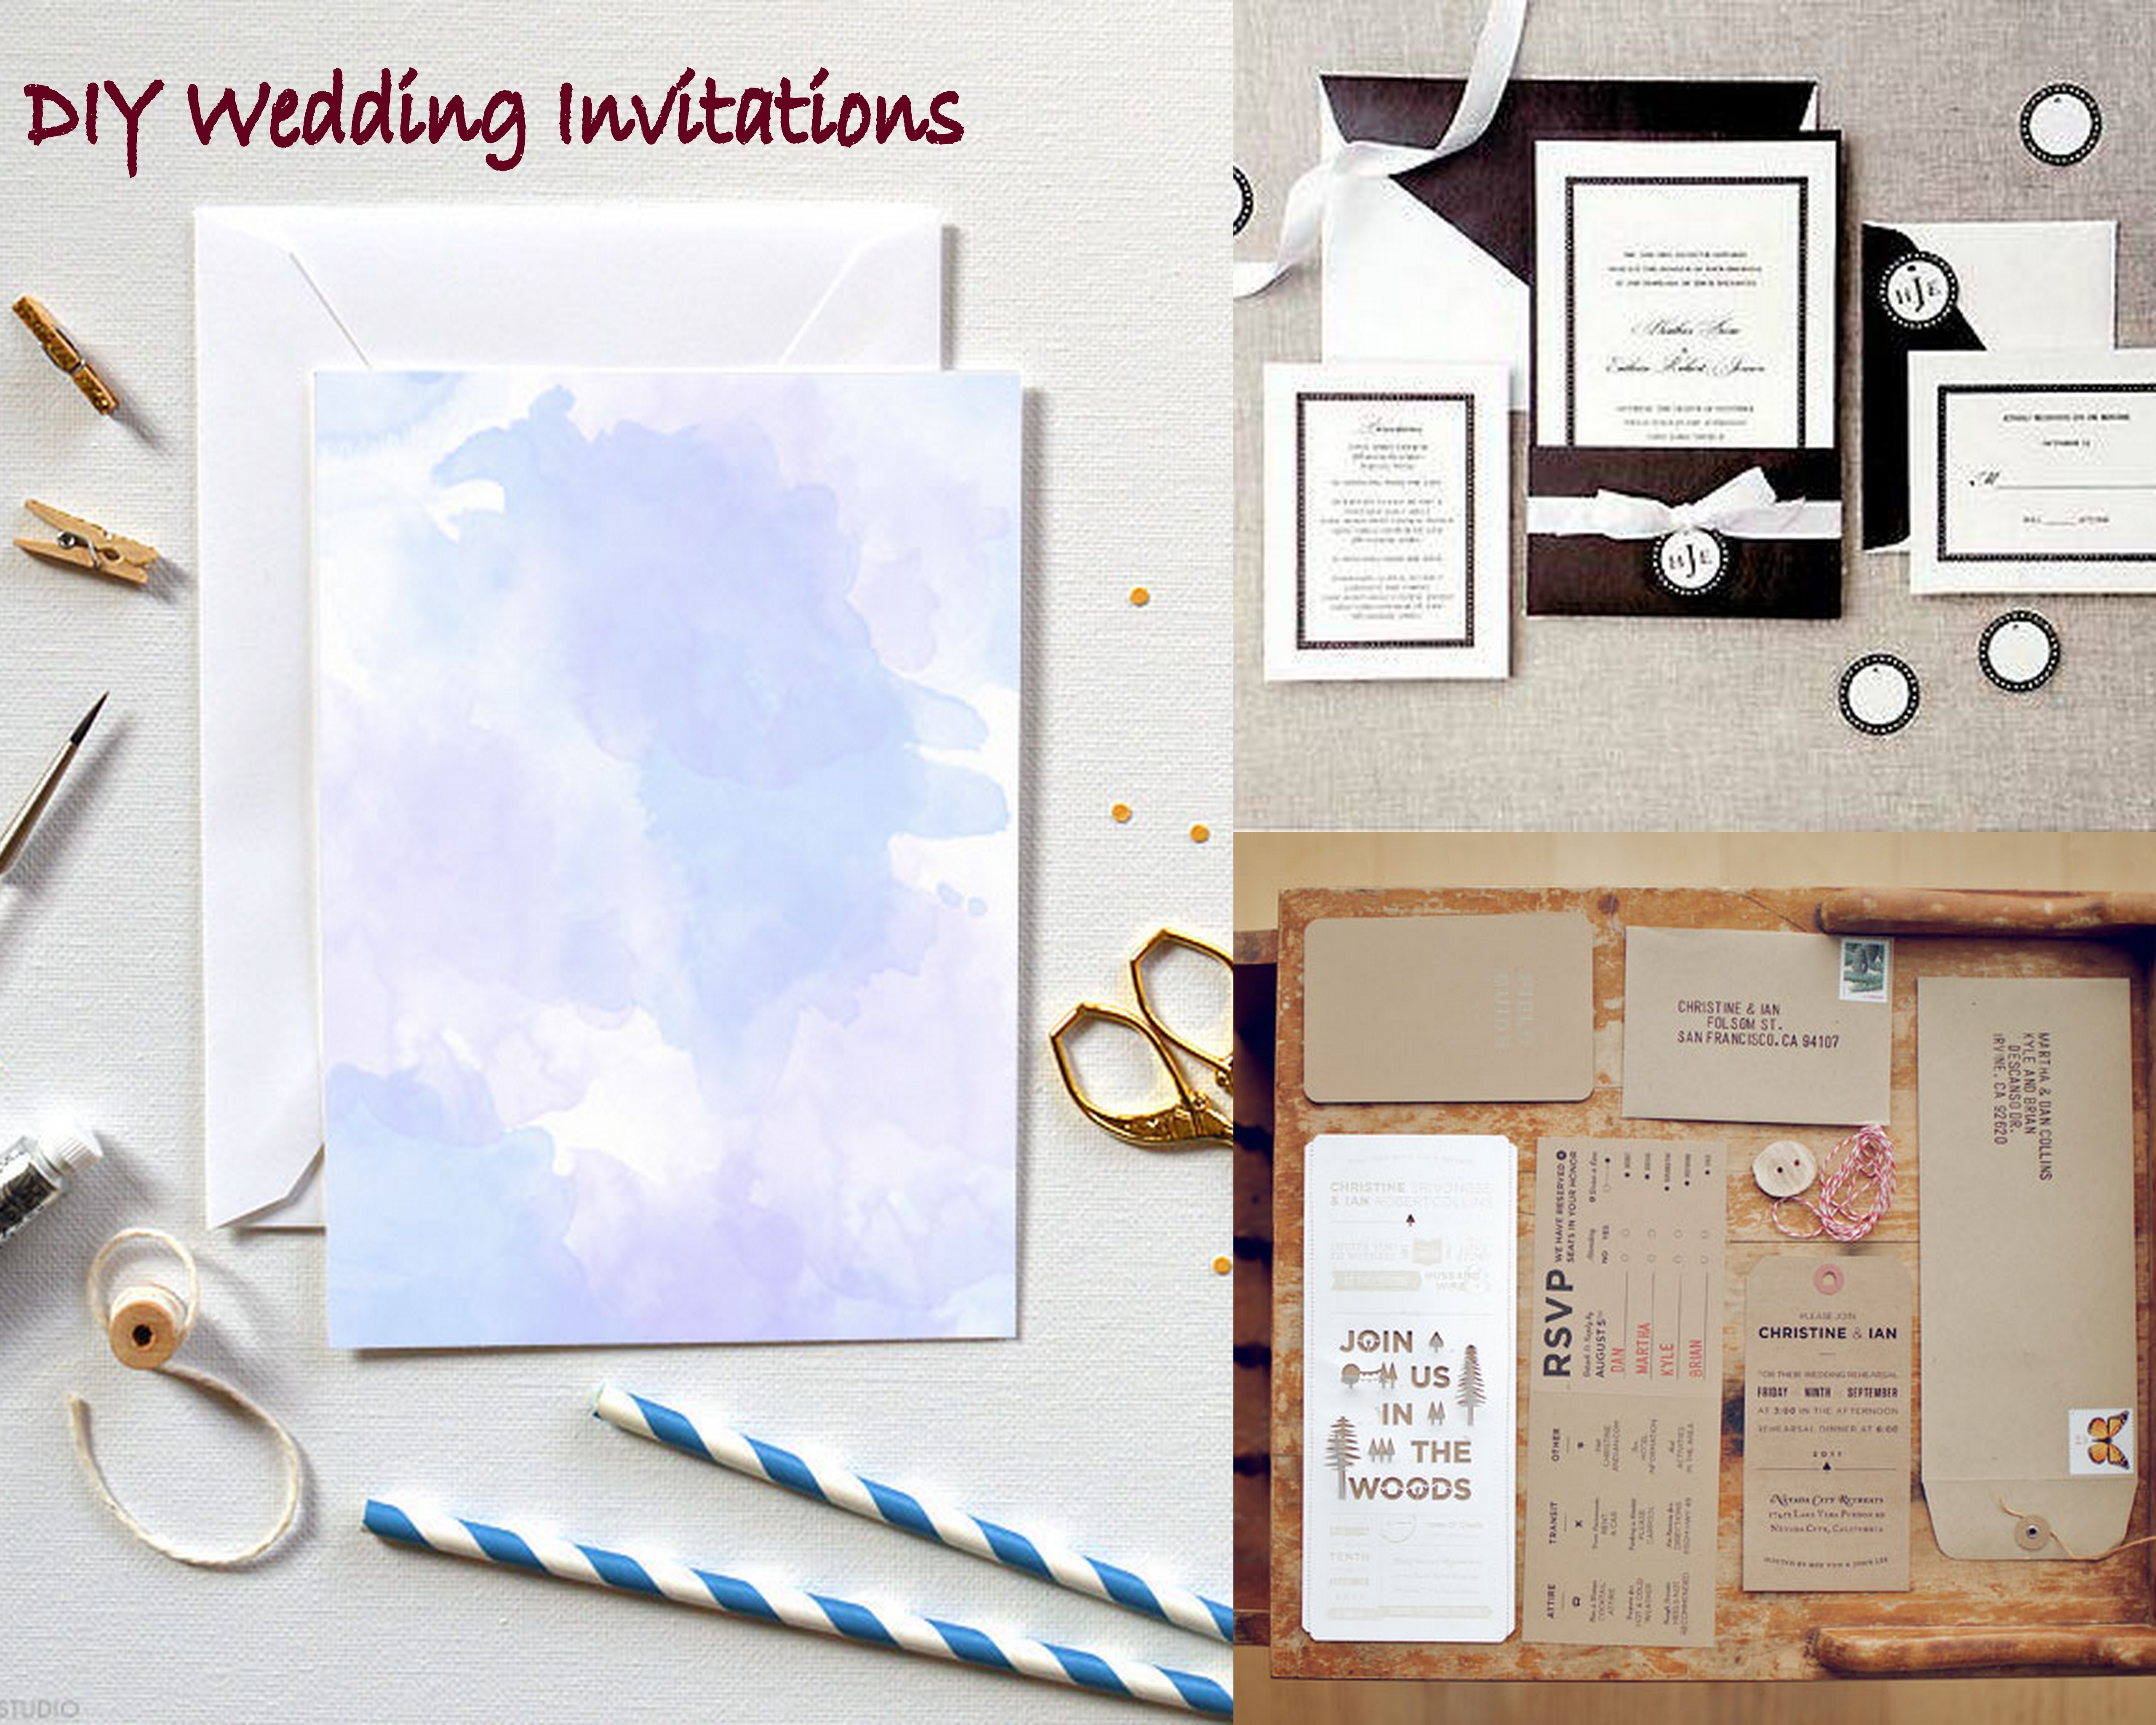 A2ZWeddingcardsDIY Wedding Kit weddinginspiration 